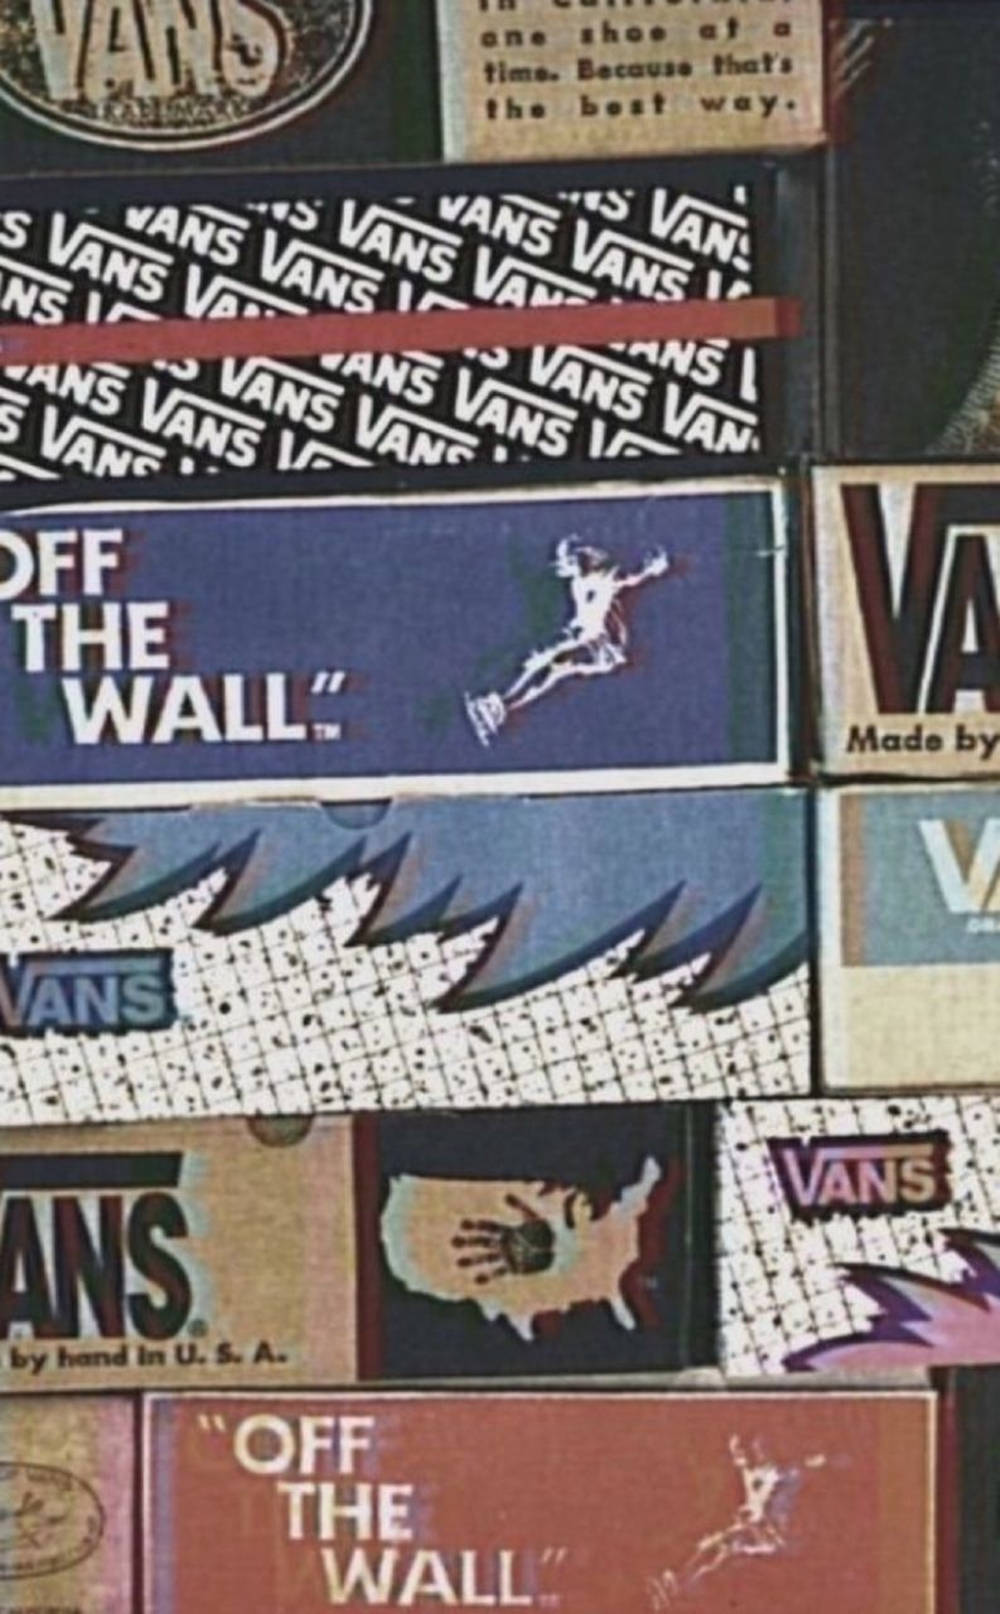 Free Vans Off The Wall Wallpaper Downloads, Vans Off The Wall Wallpaper for FREE